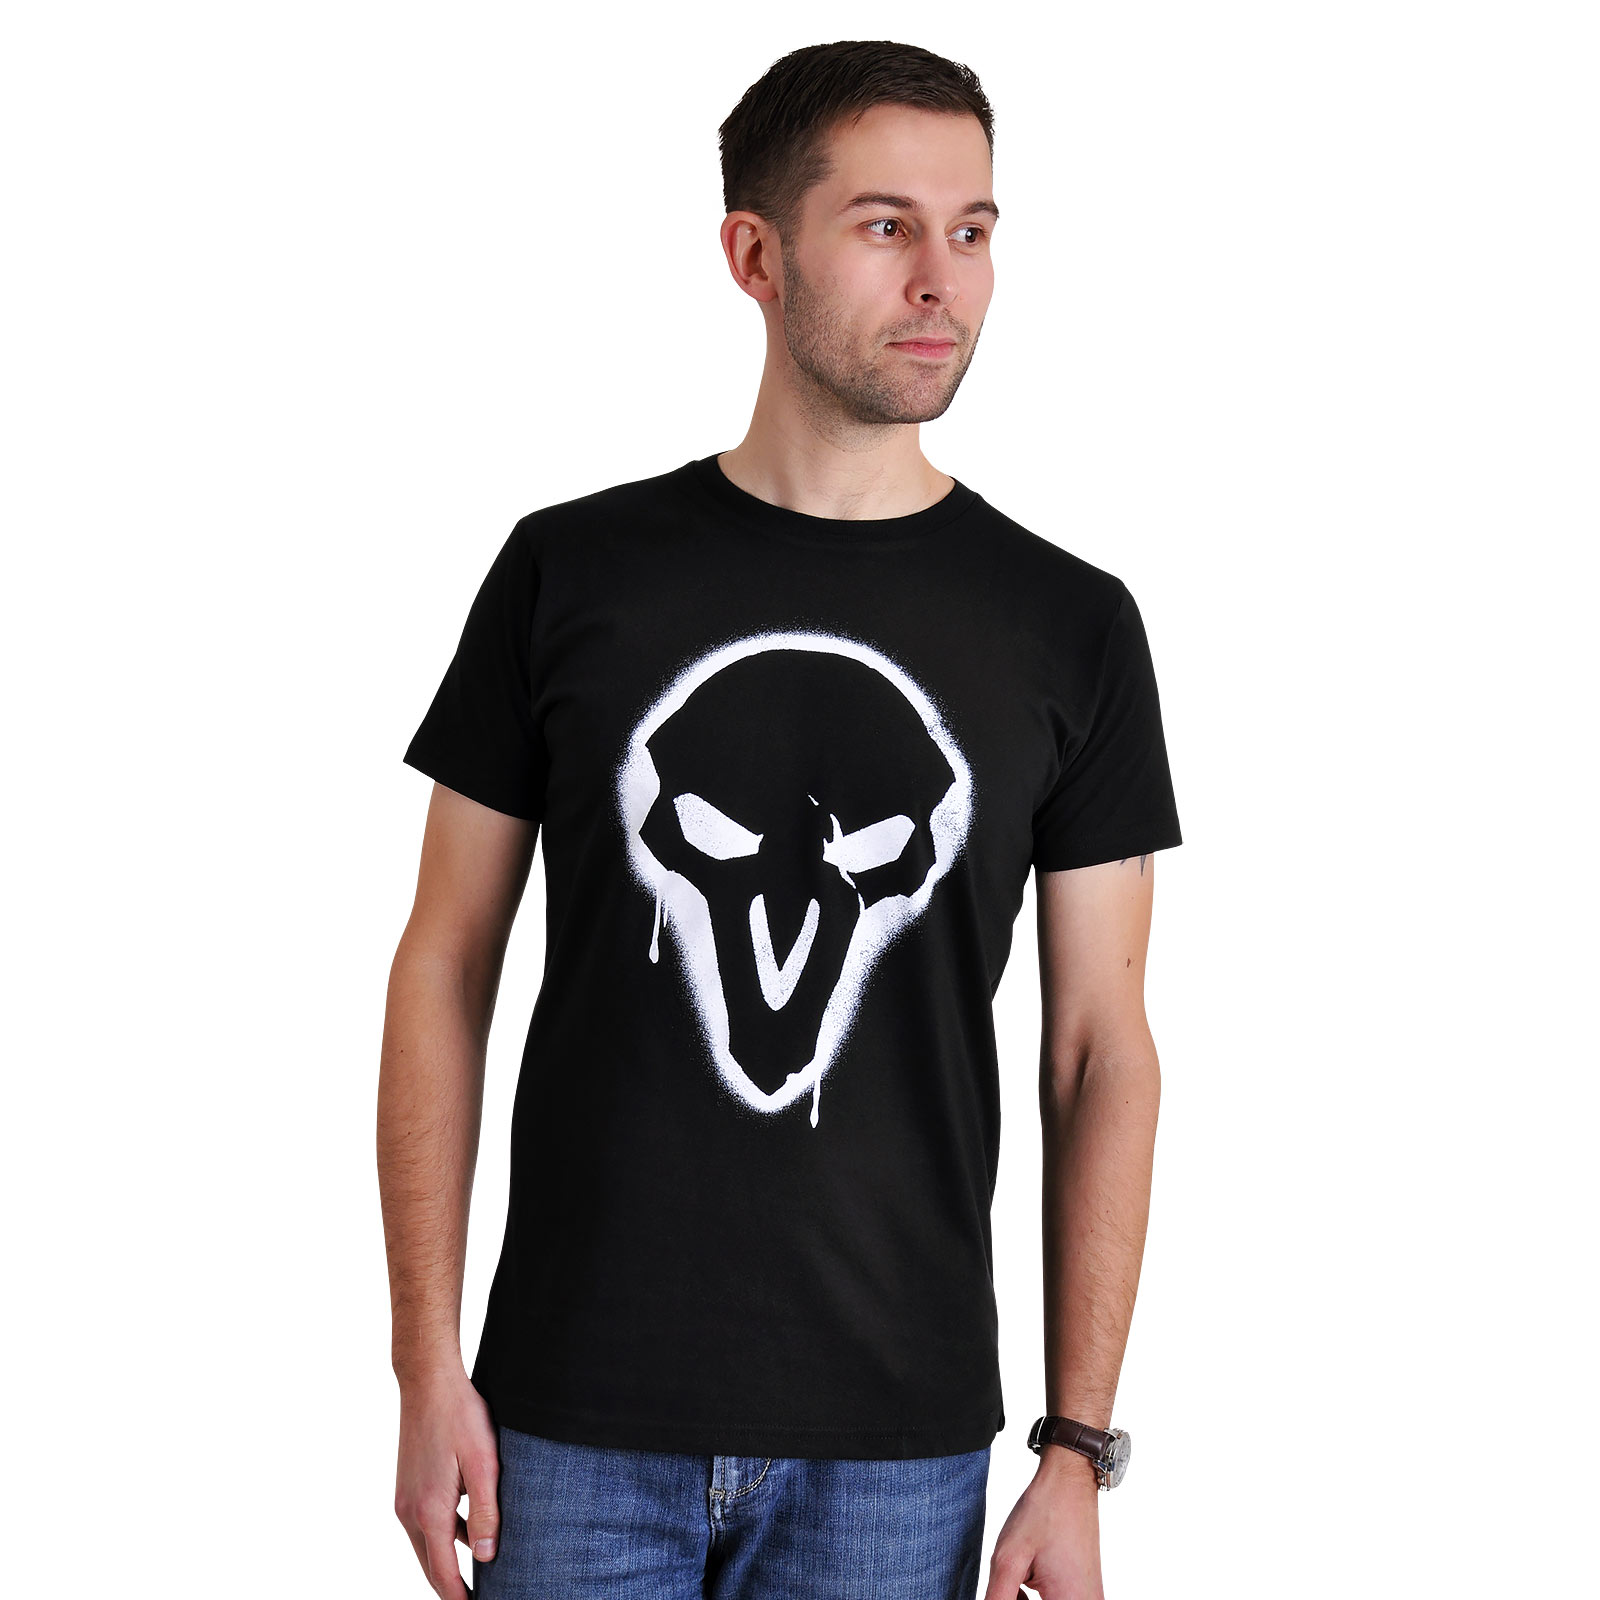 Overwatch - Reaper Spray Logo T-Shirt schwarz